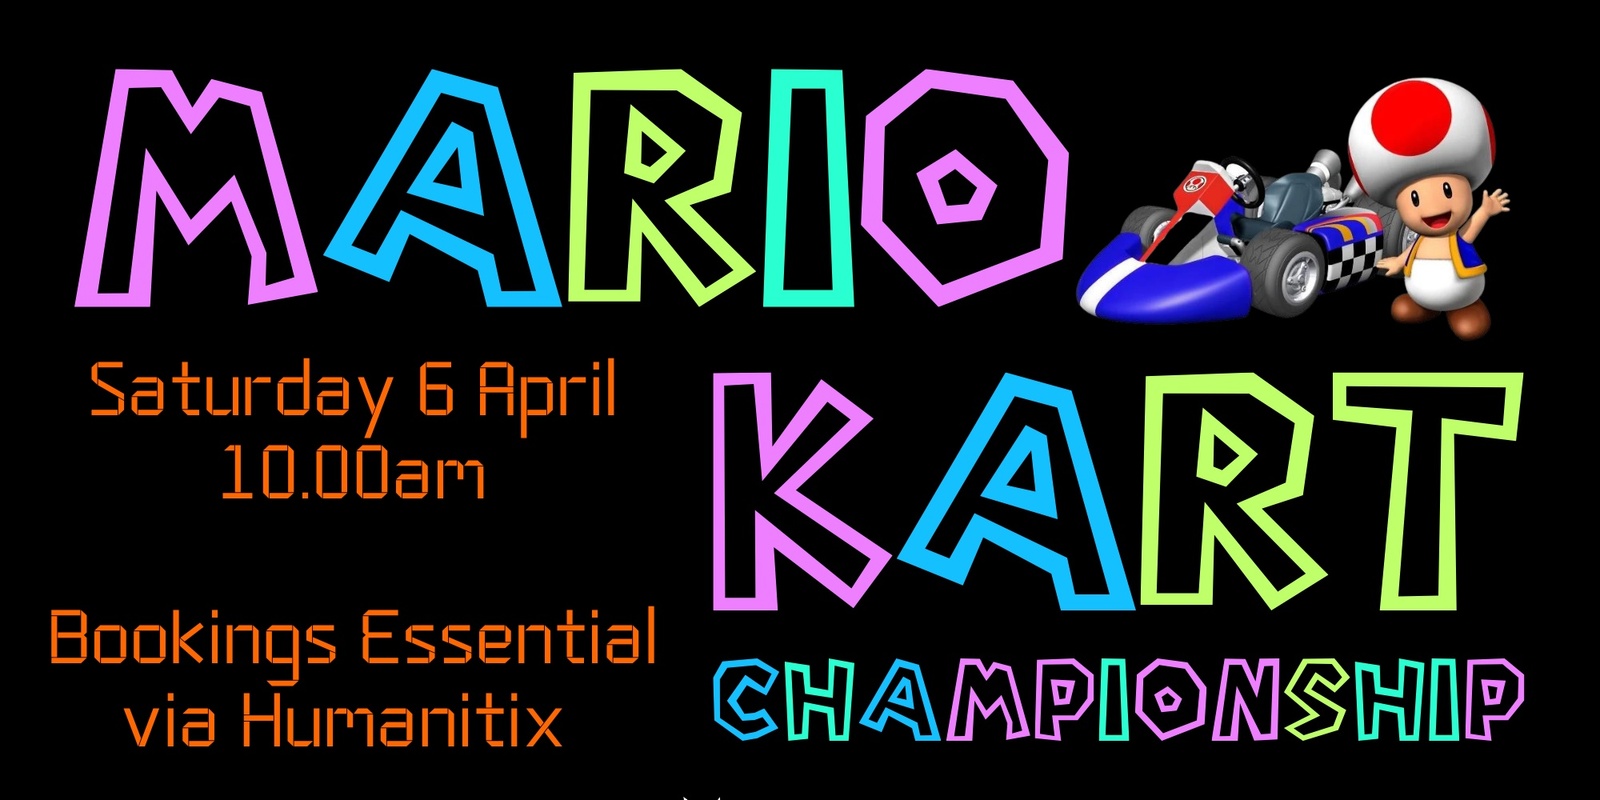 Banner image for Mario Kart Championship